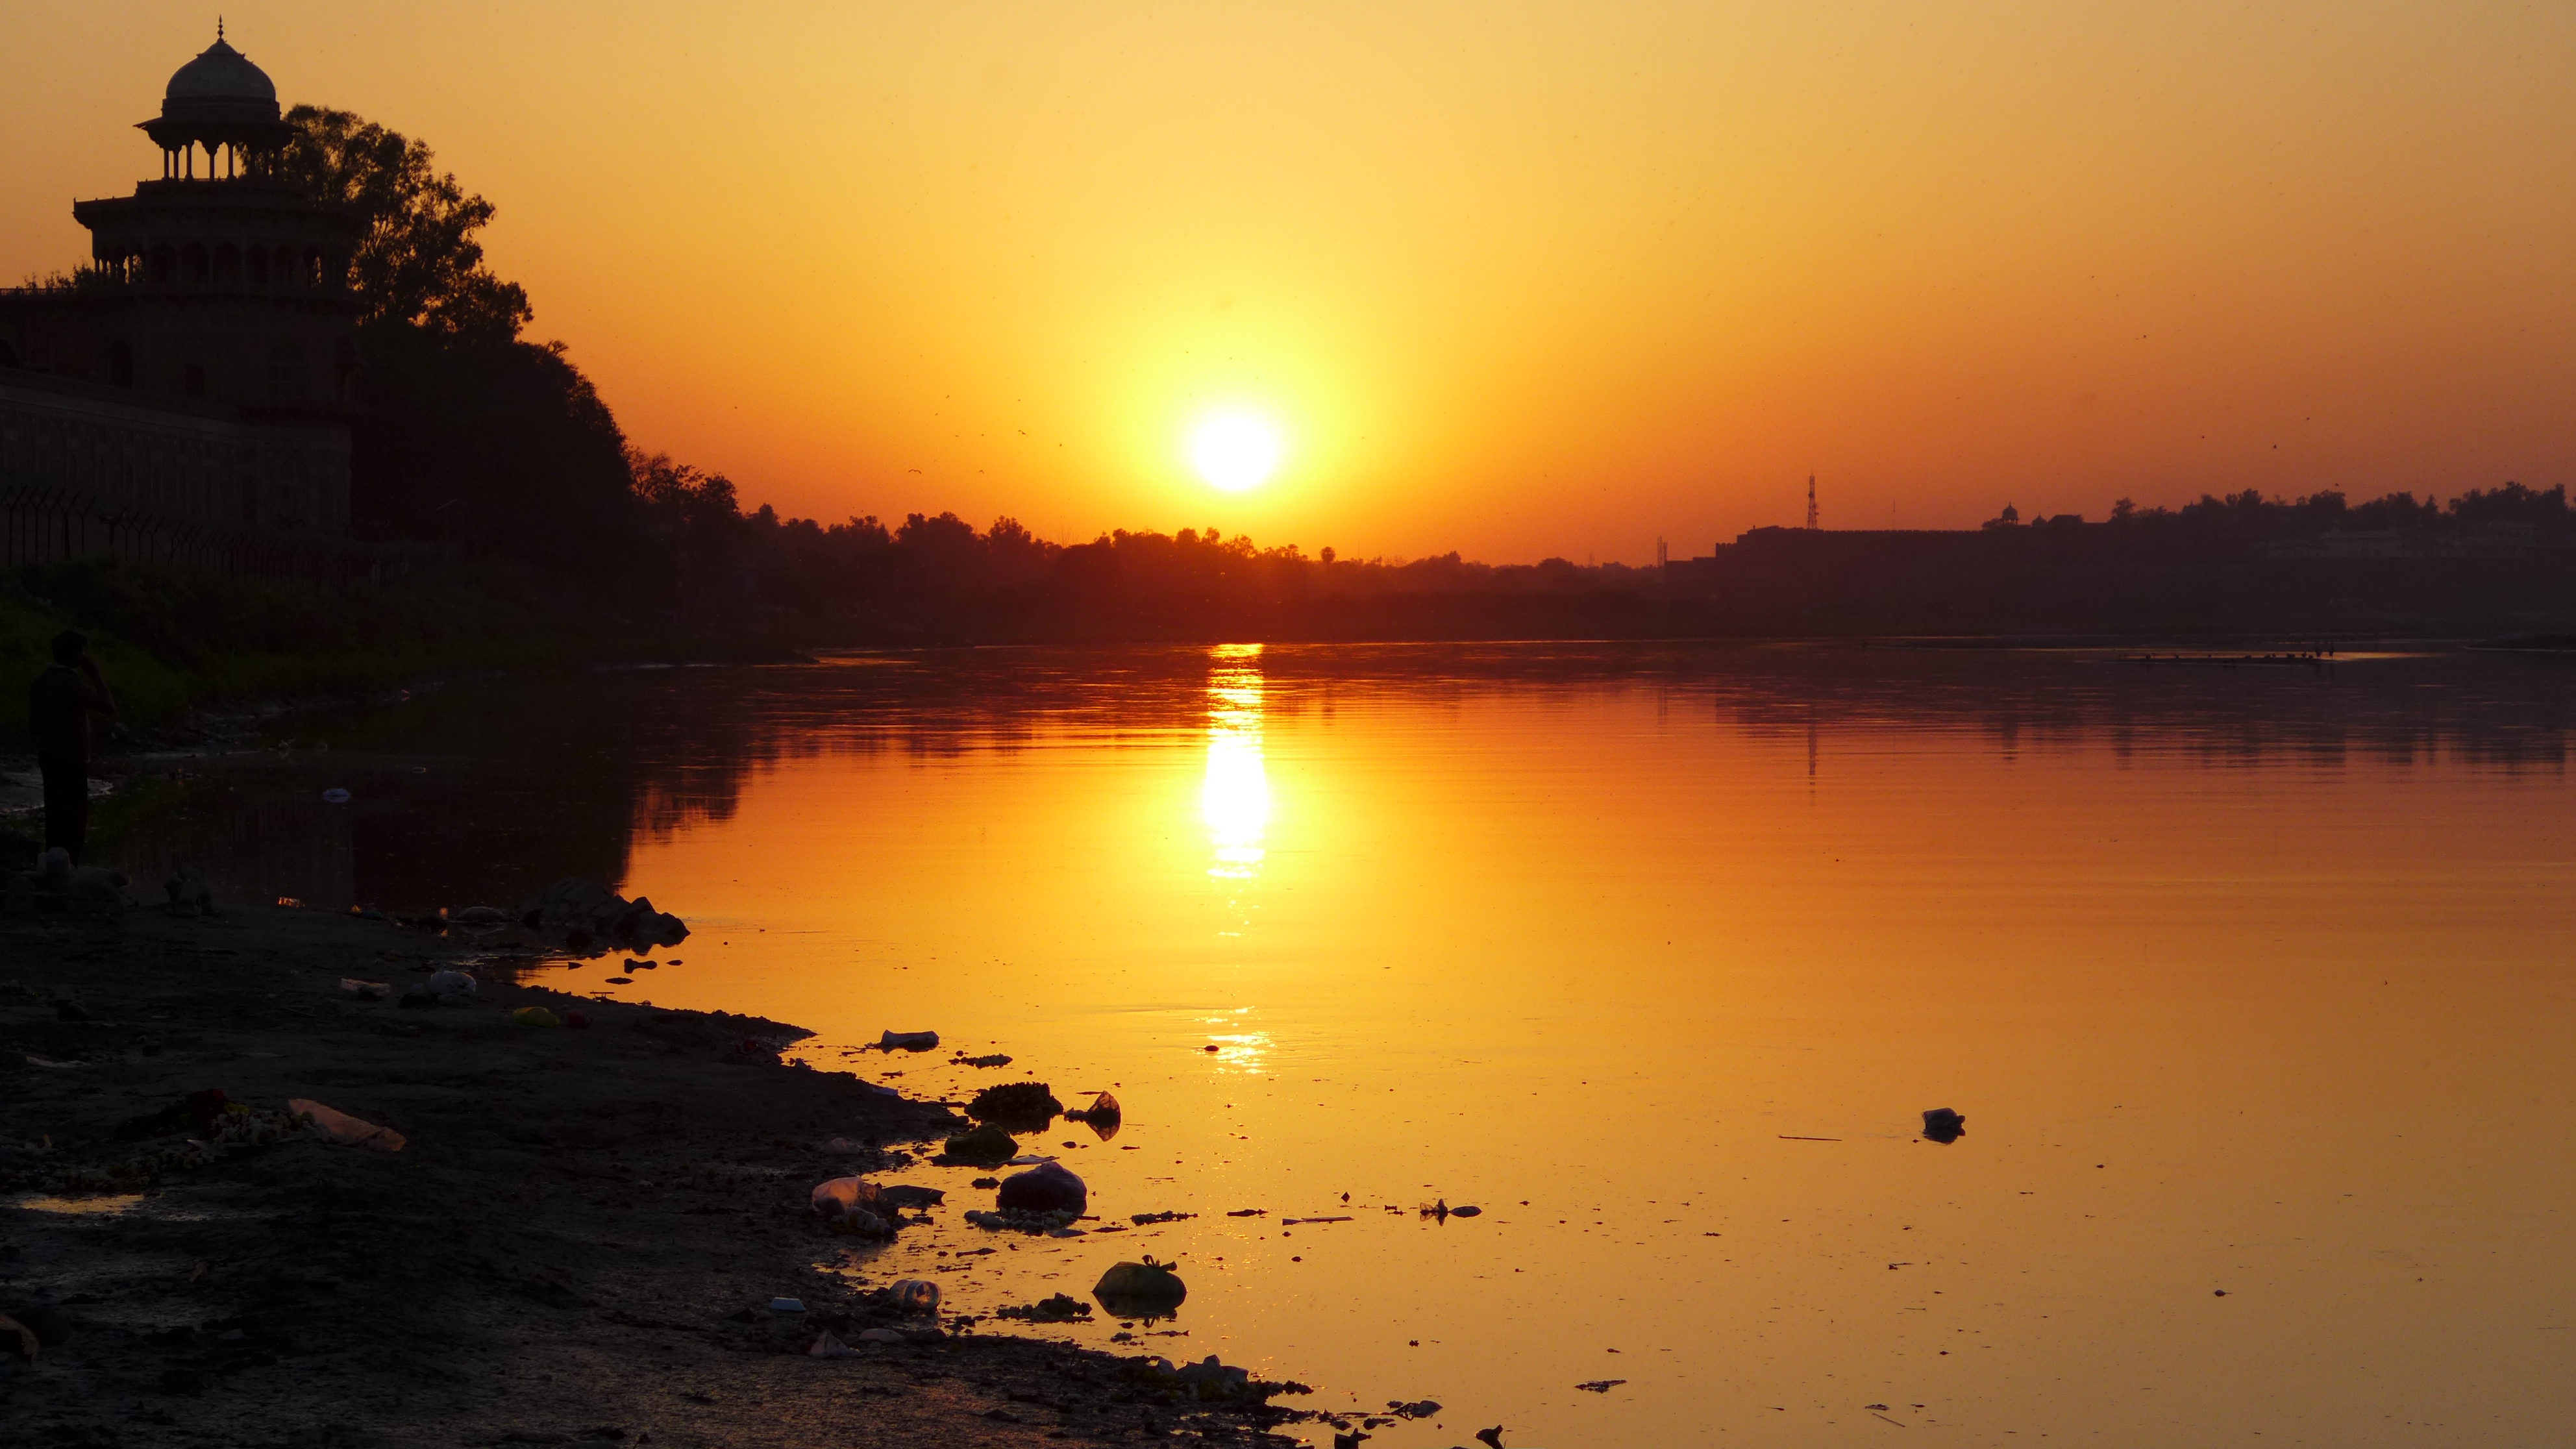 Sunset over the Yamuna River. 